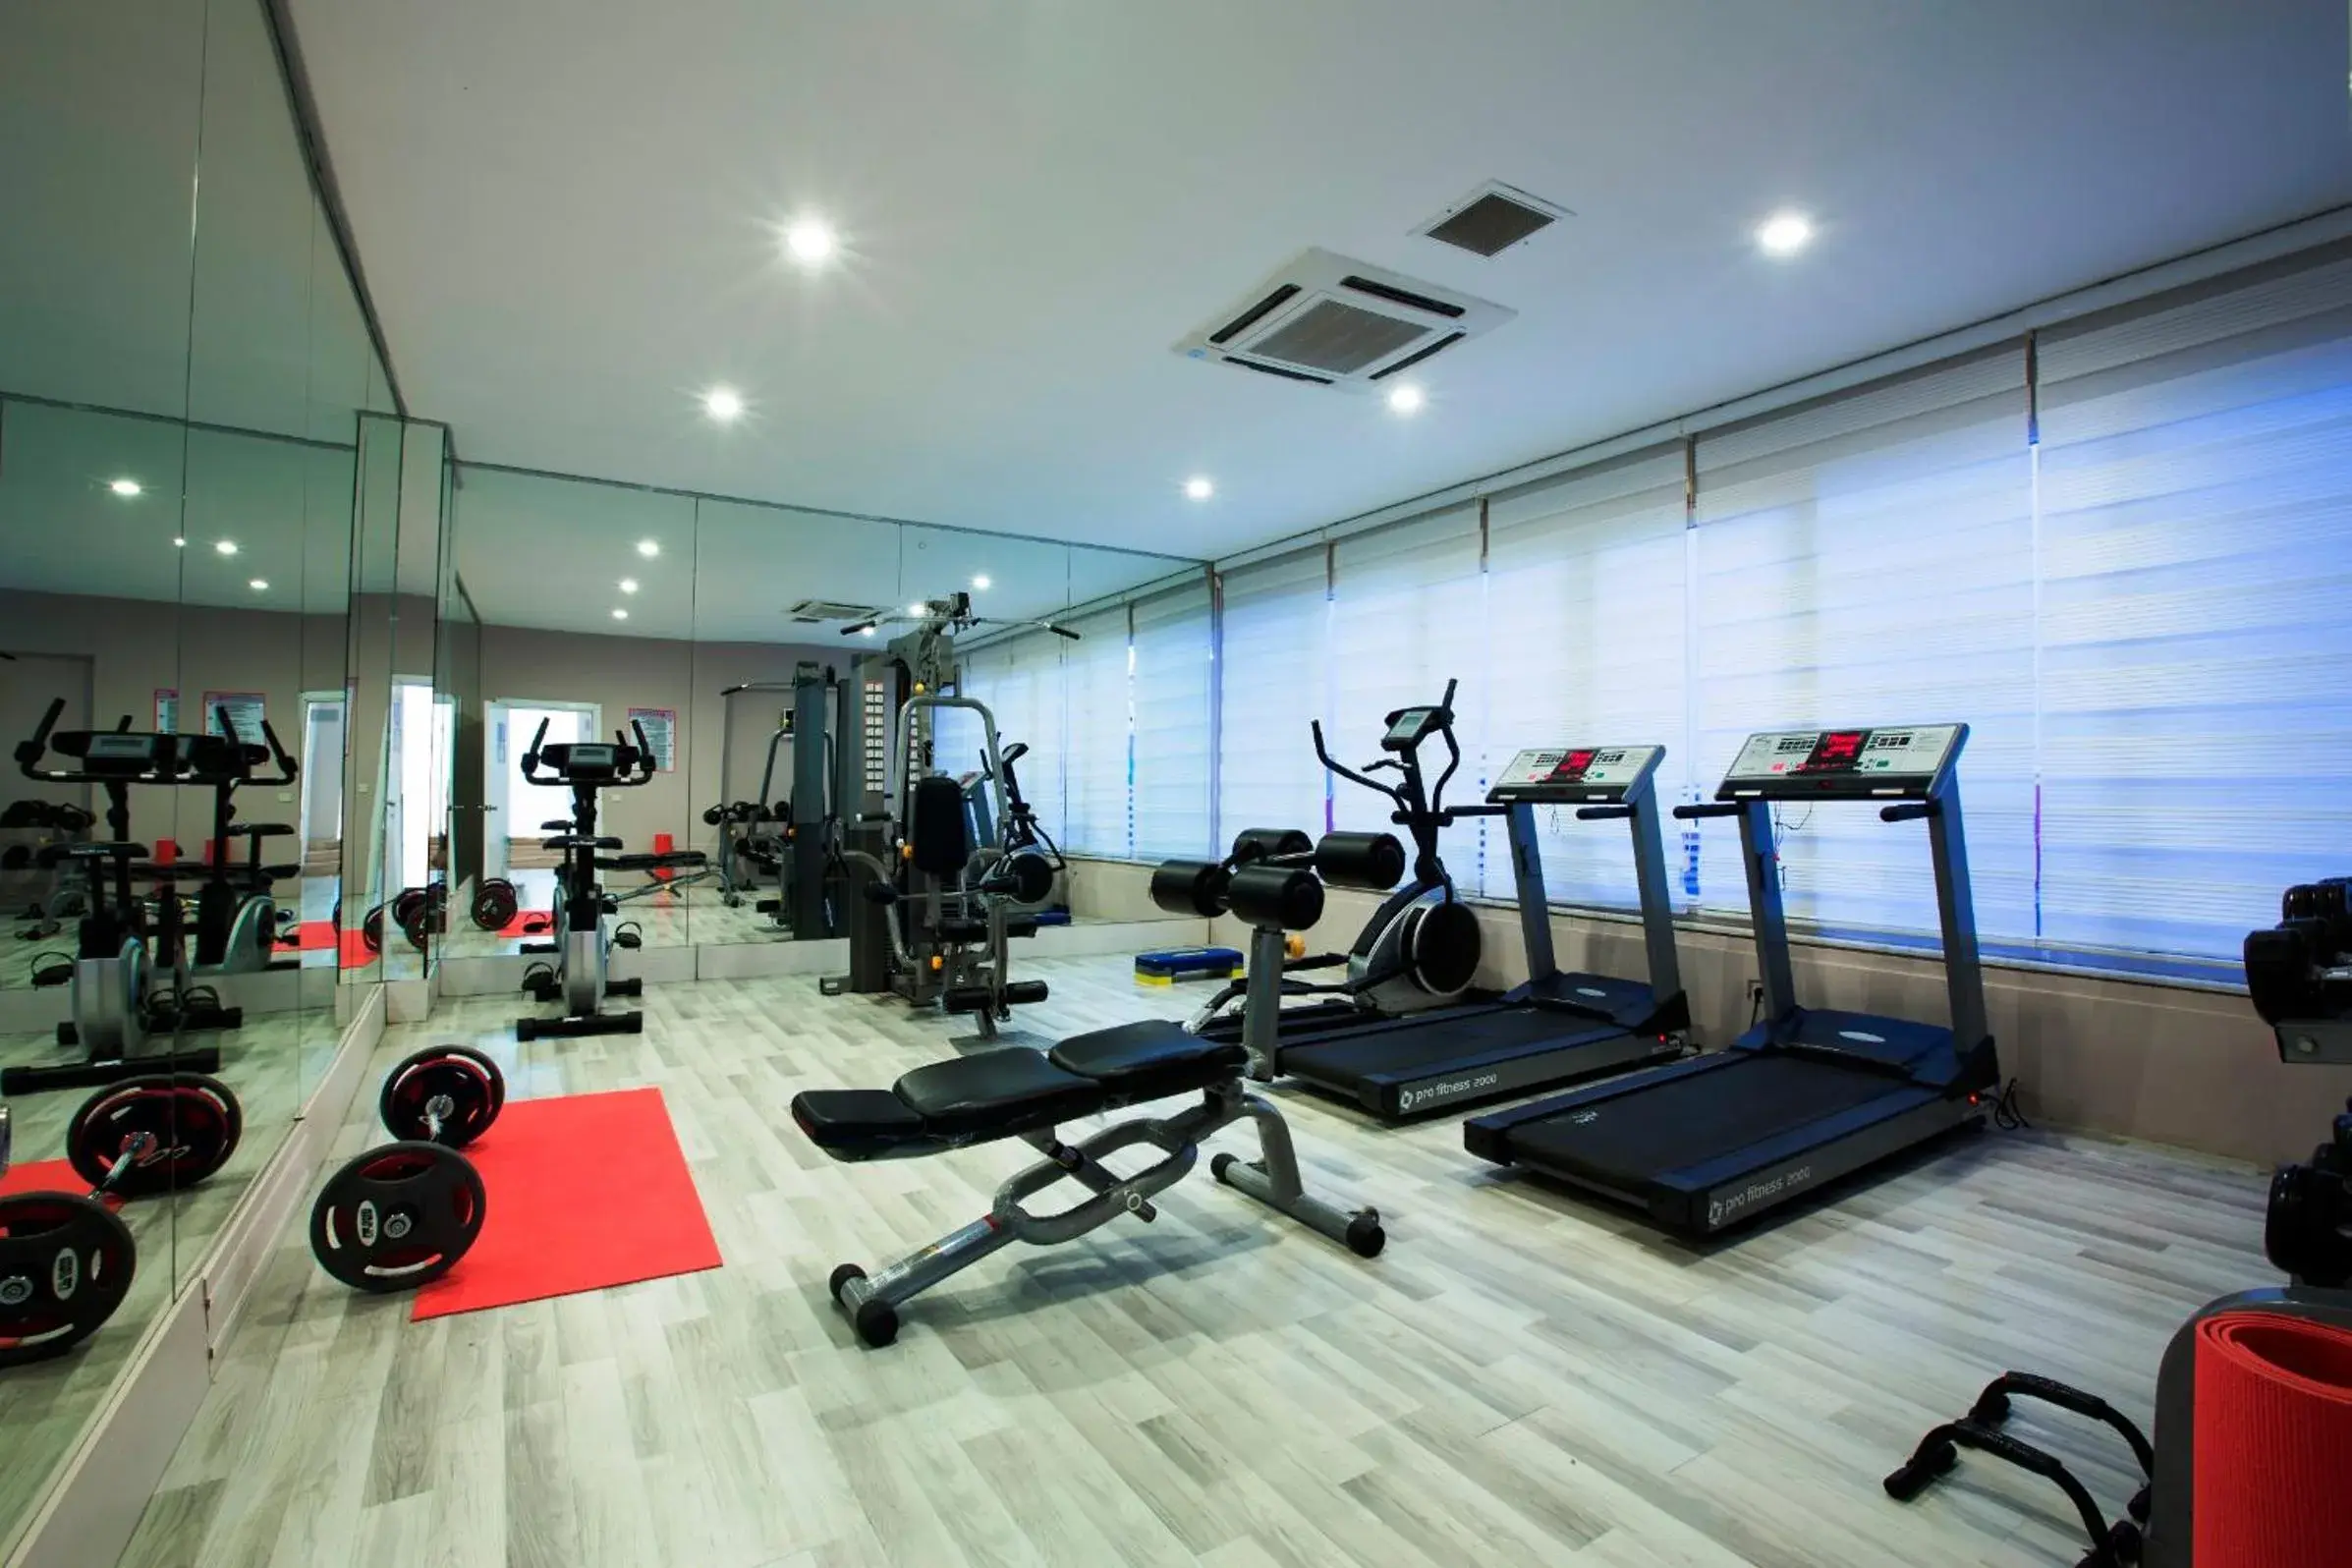 Fitness centre/facilities, Fitness Center/Facilities in Ramada Resort Side